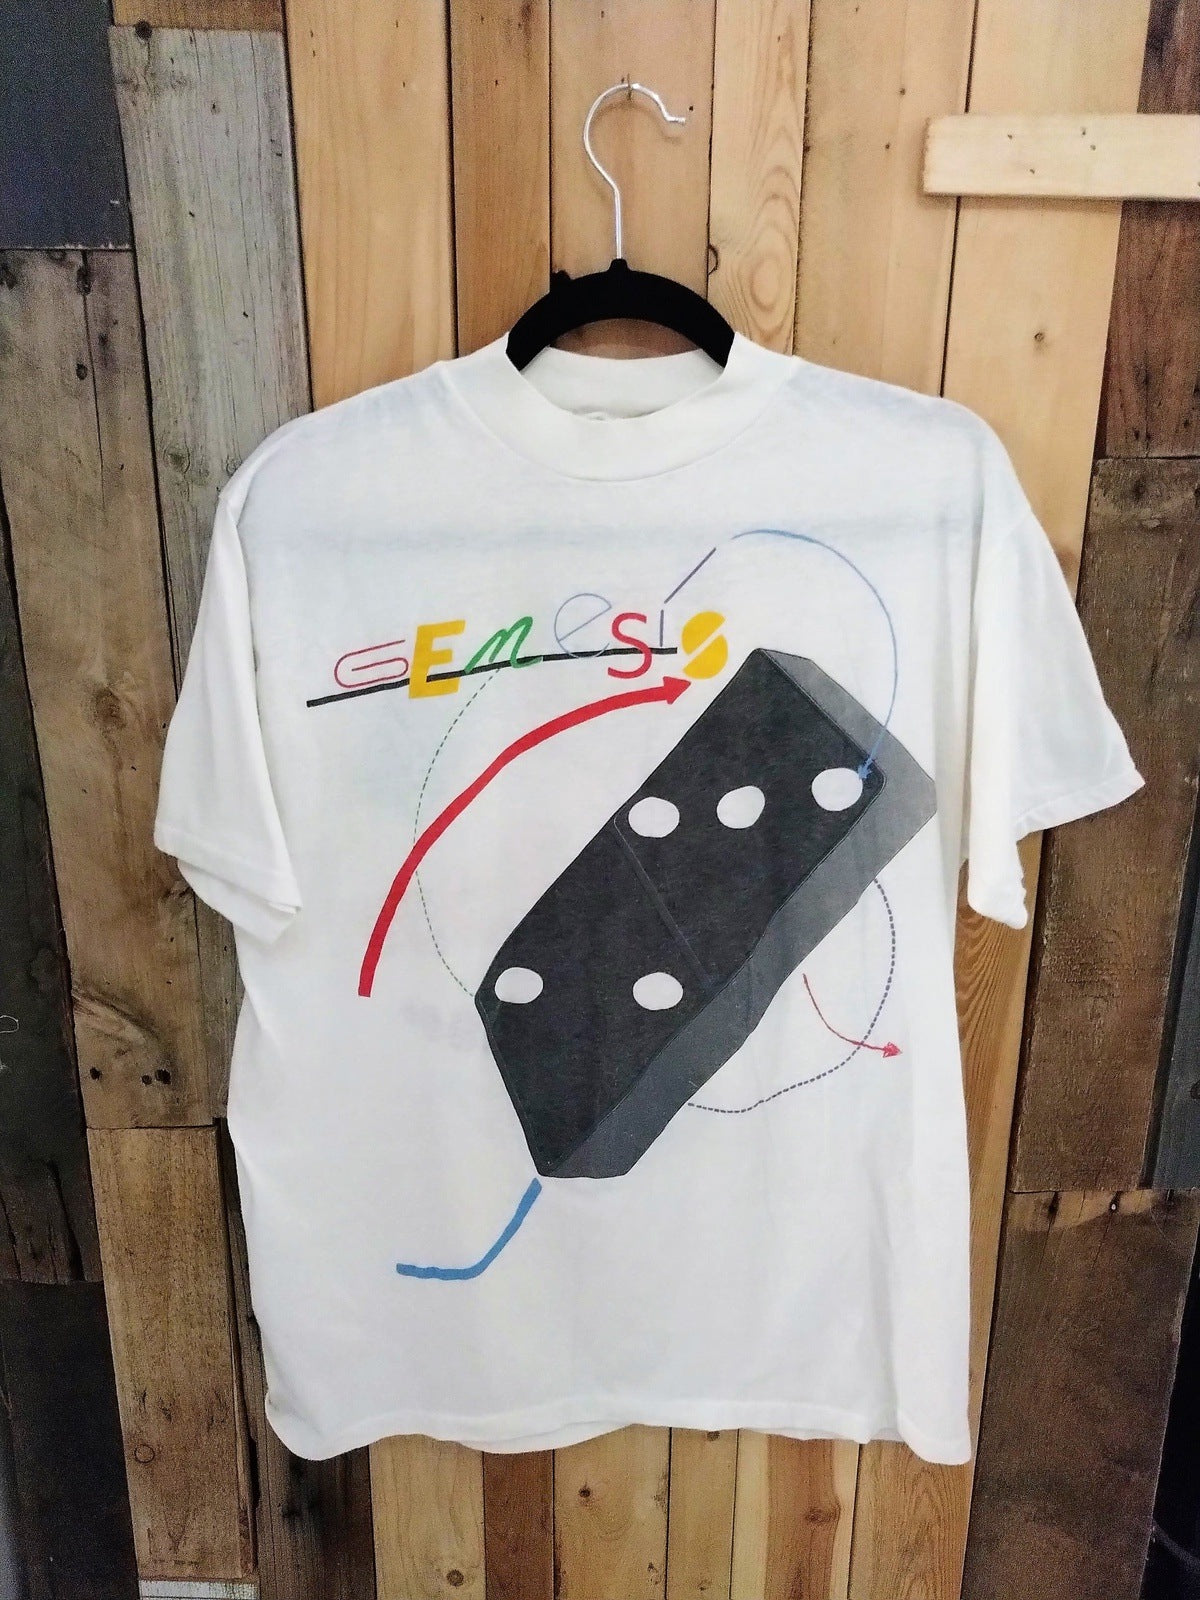 Genesis Original "Invisible Touch" 1986 Tour T Shirt Size XXL 963213DQ